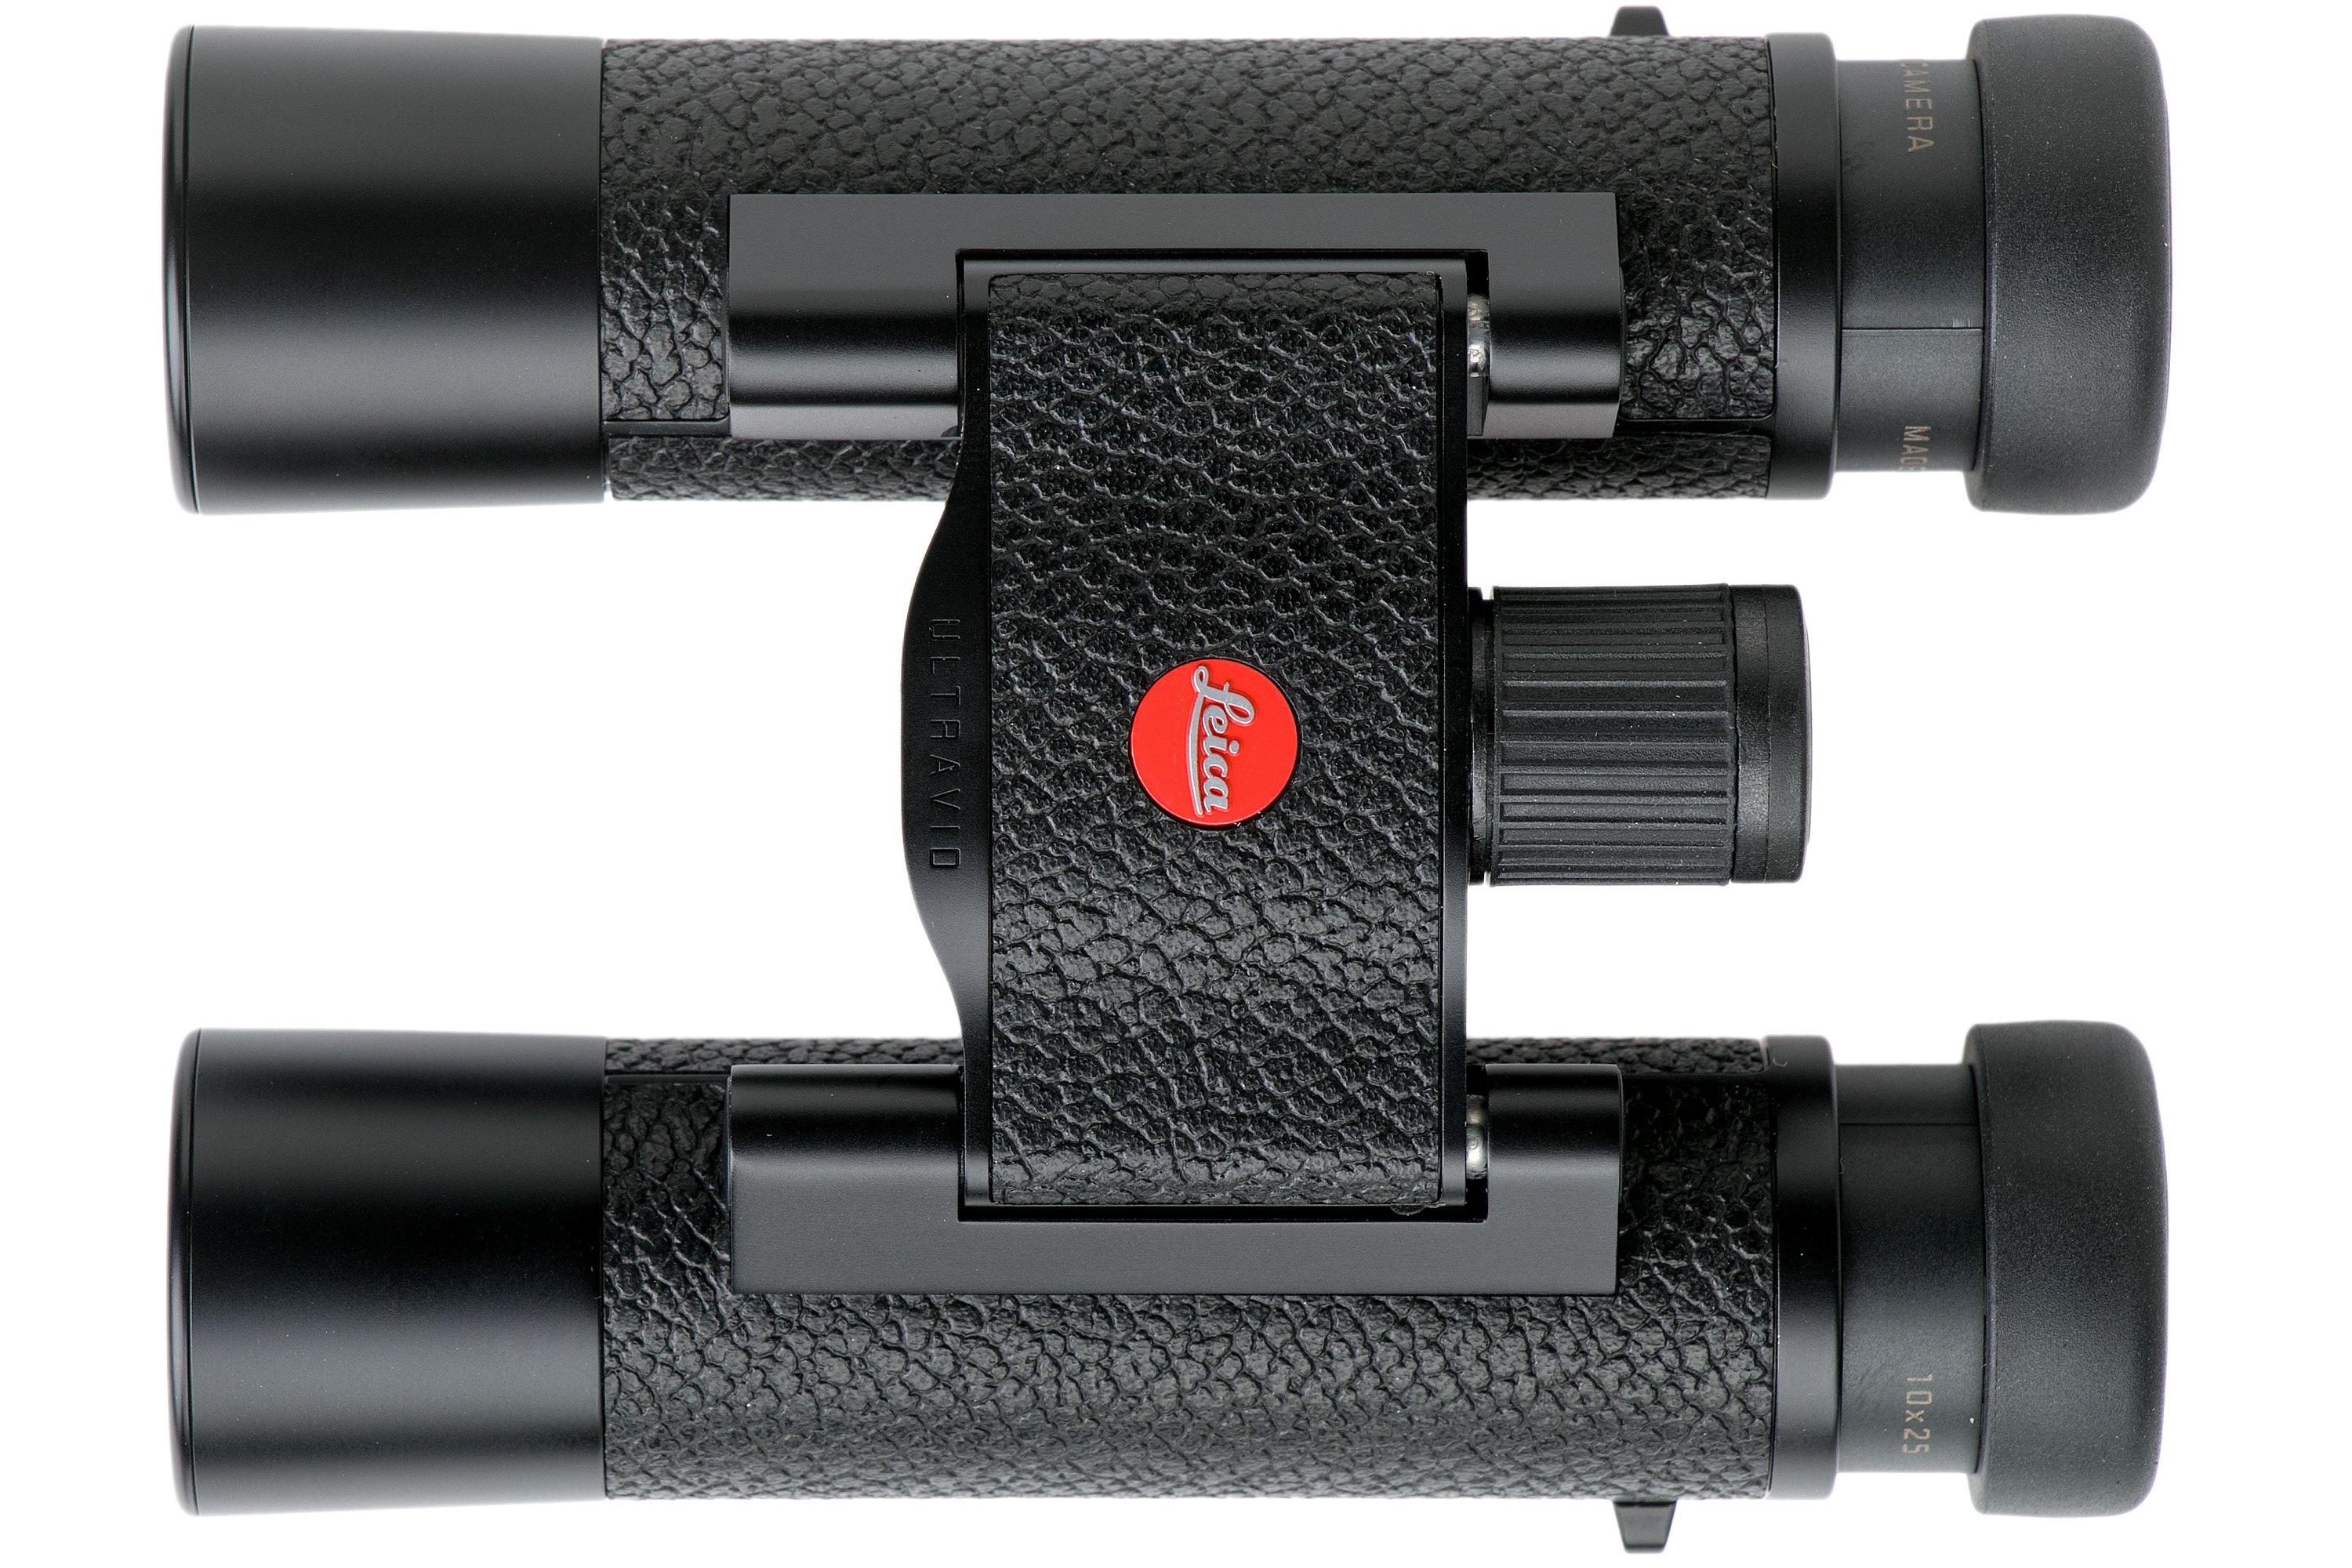 Leica ULTRAVID 10x25 binoculars, black, leather cover